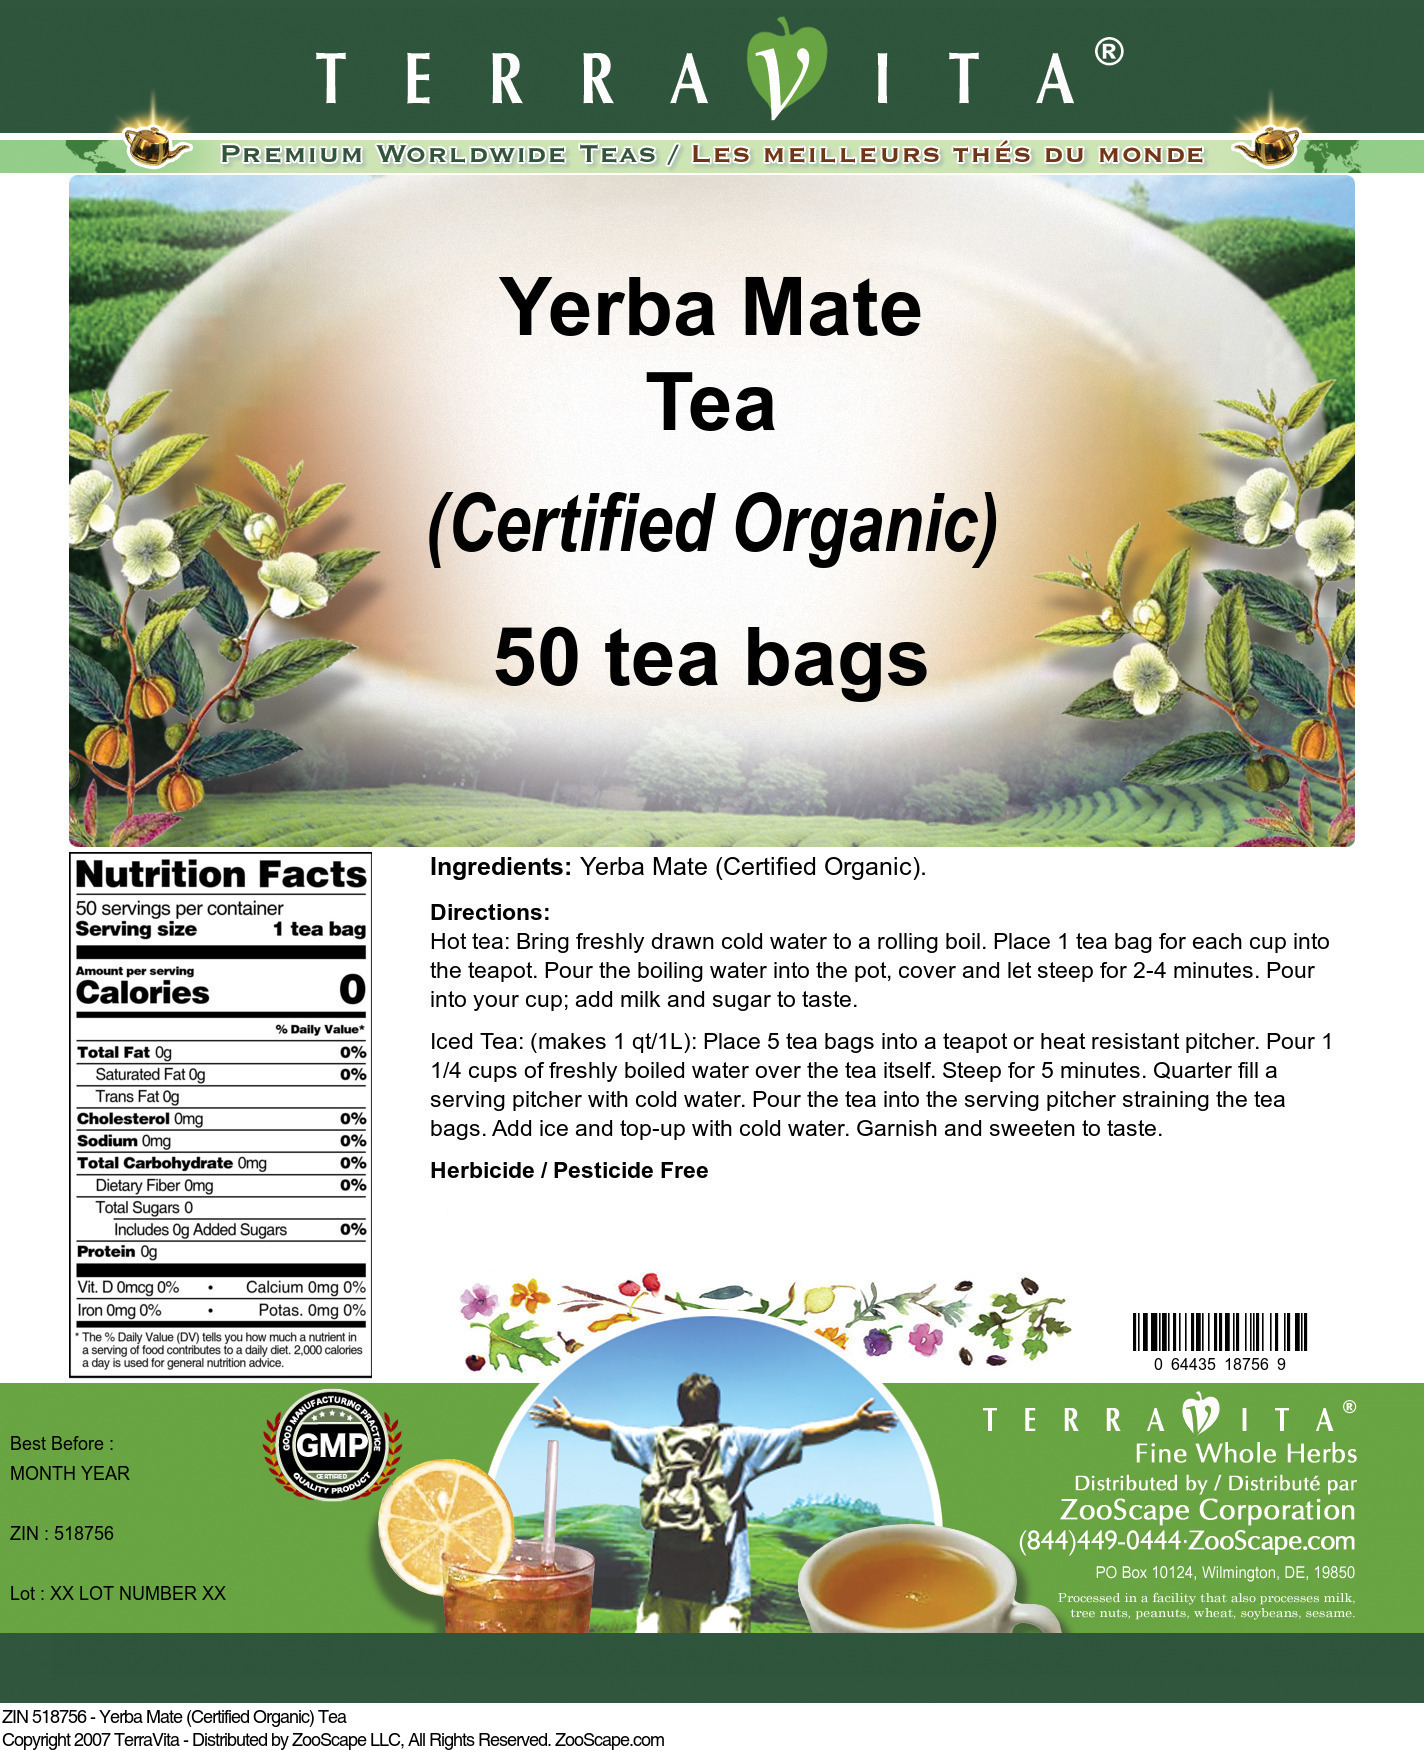 Yerba Mate (Certified Organic) Tea - Label